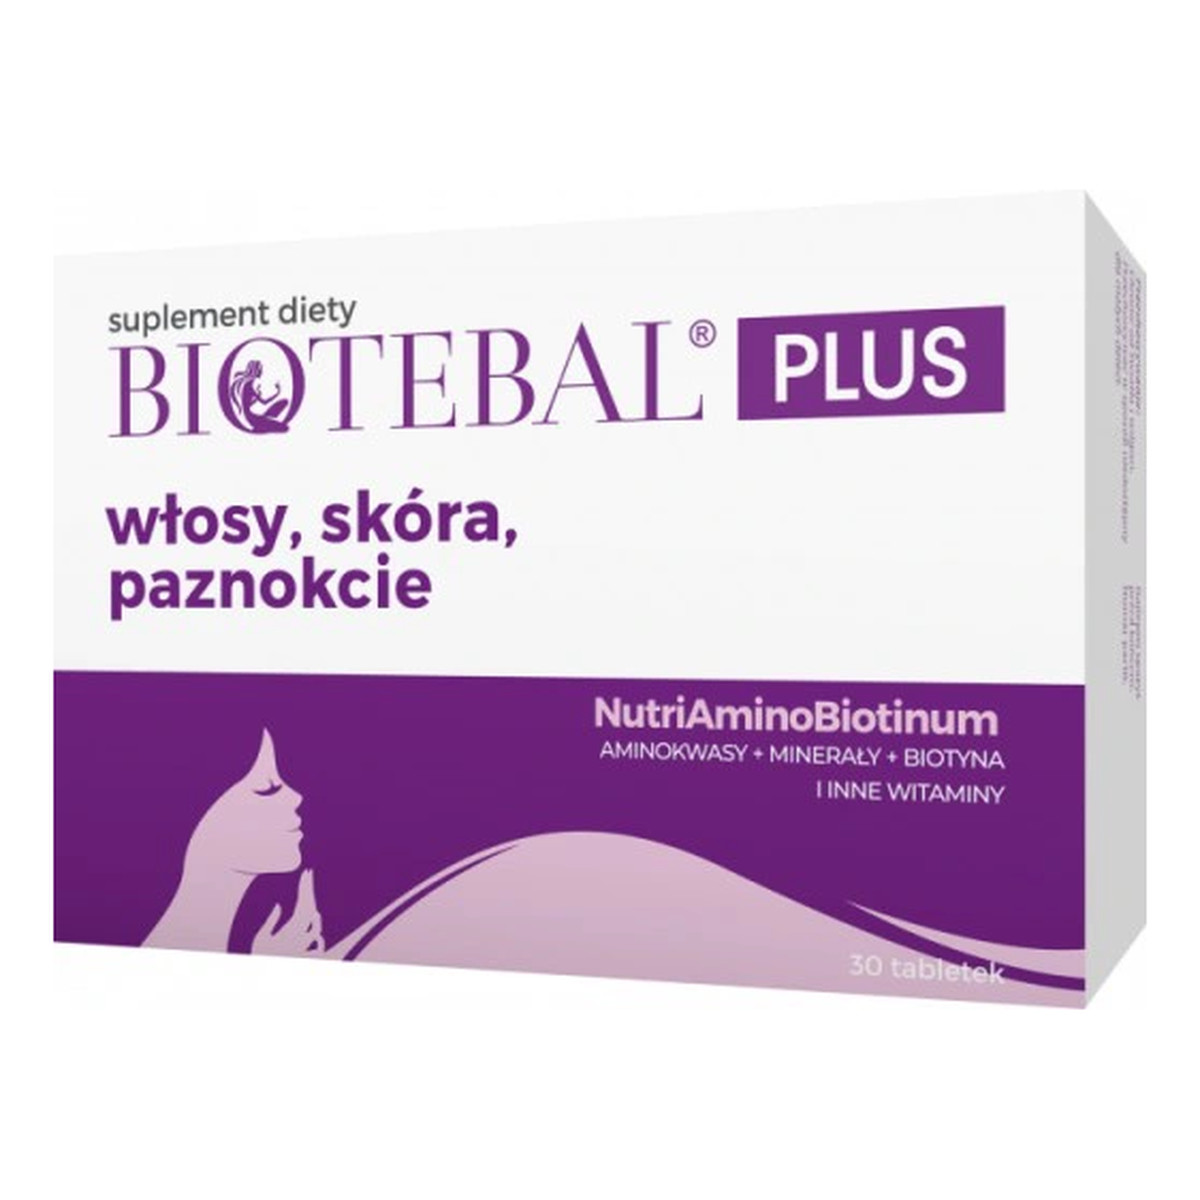 Biotebal Plus Włosy, skóra, paznokcie 30 tabletek